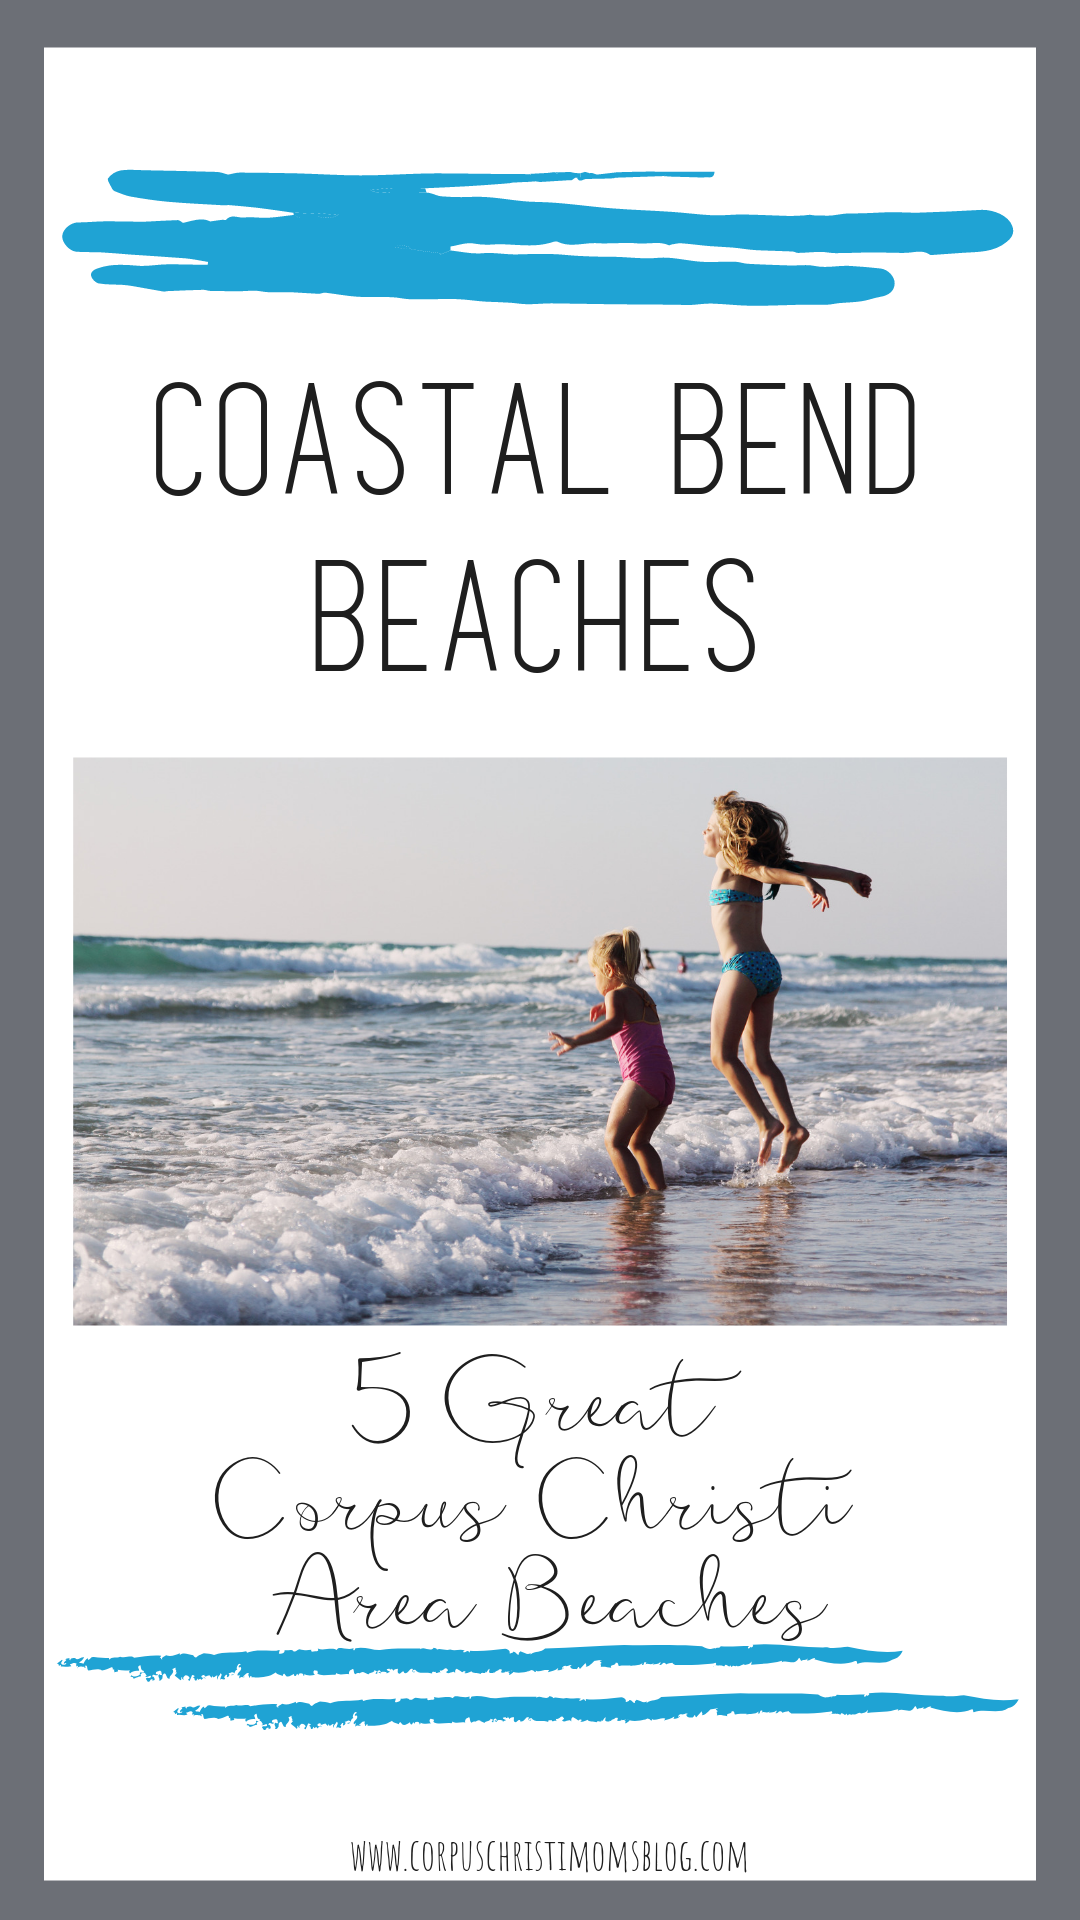 Coastal Bend Beaches pinterest cover image